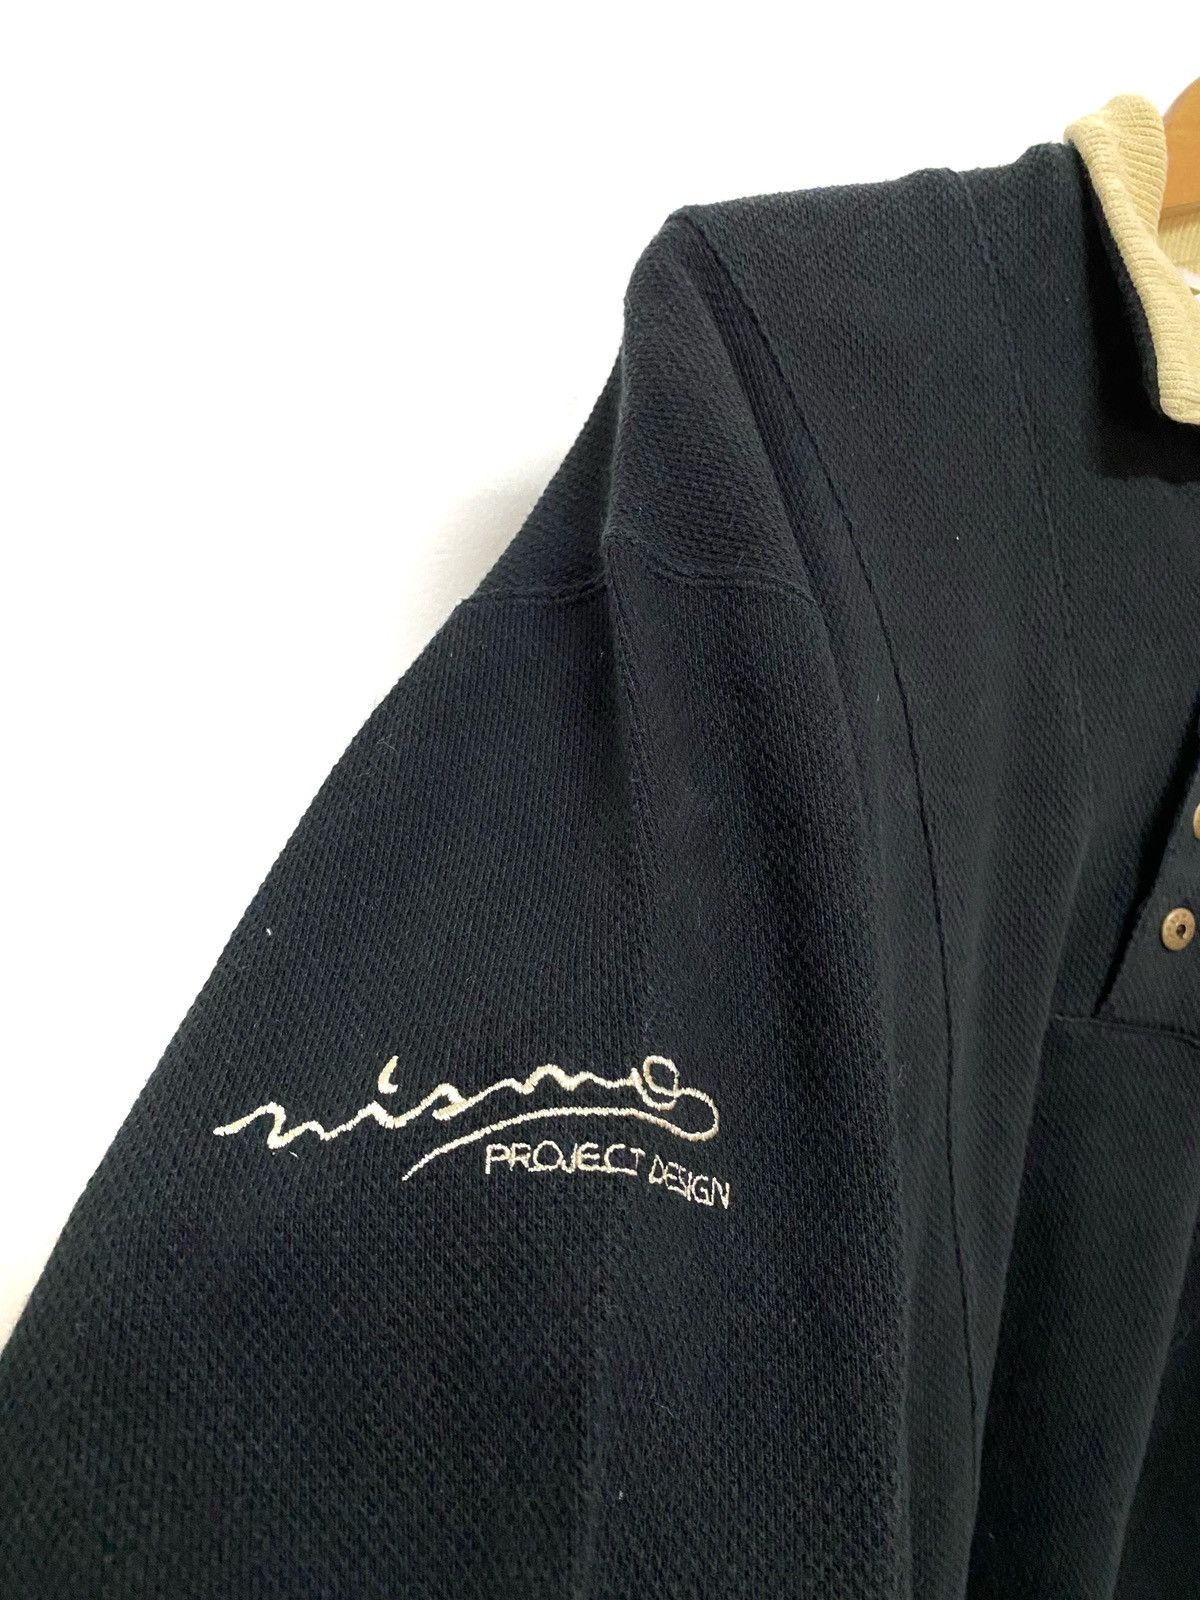 Vintage NISMO Nissan Racing Team Embroidery - 6